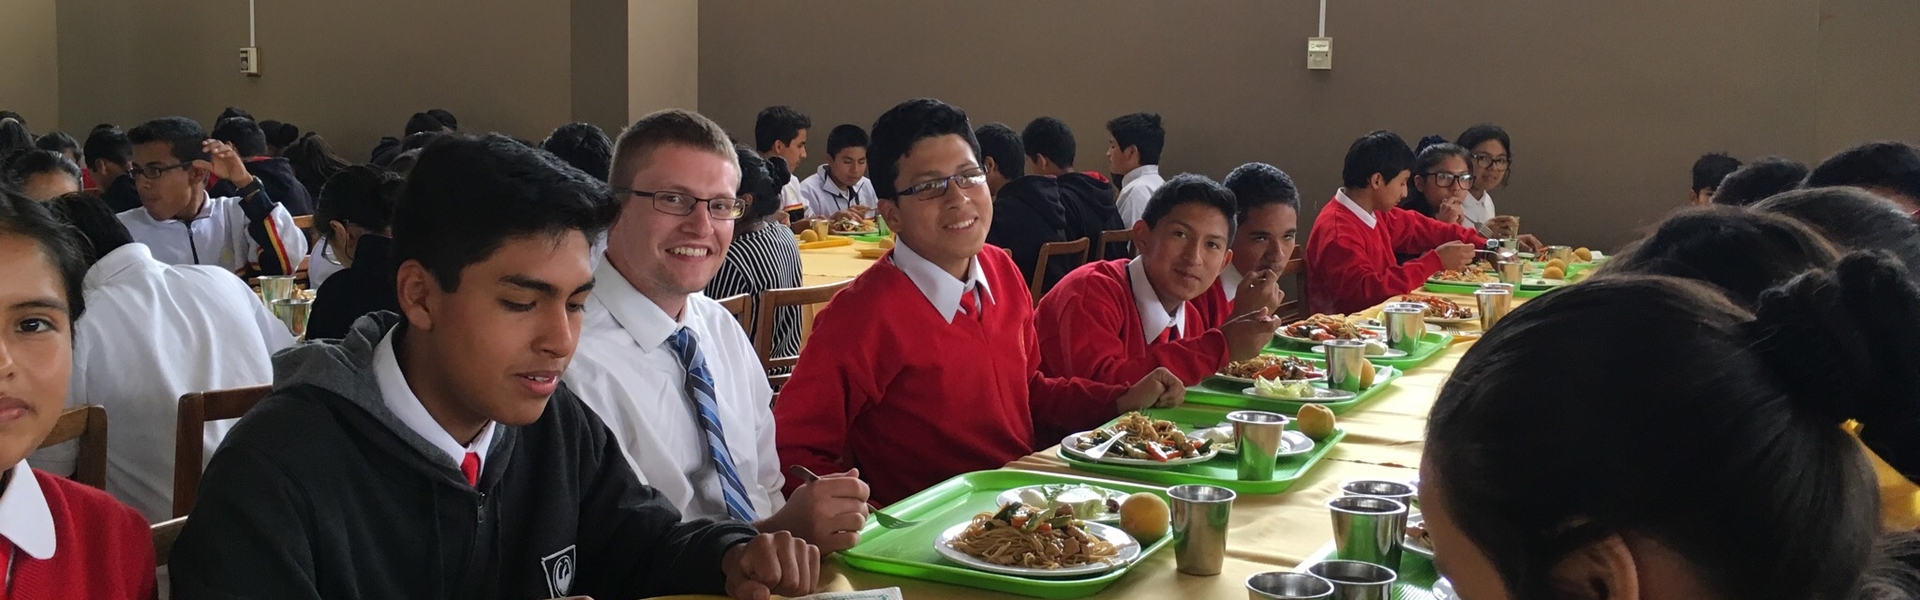 LAS minor during teaching experience in Peru